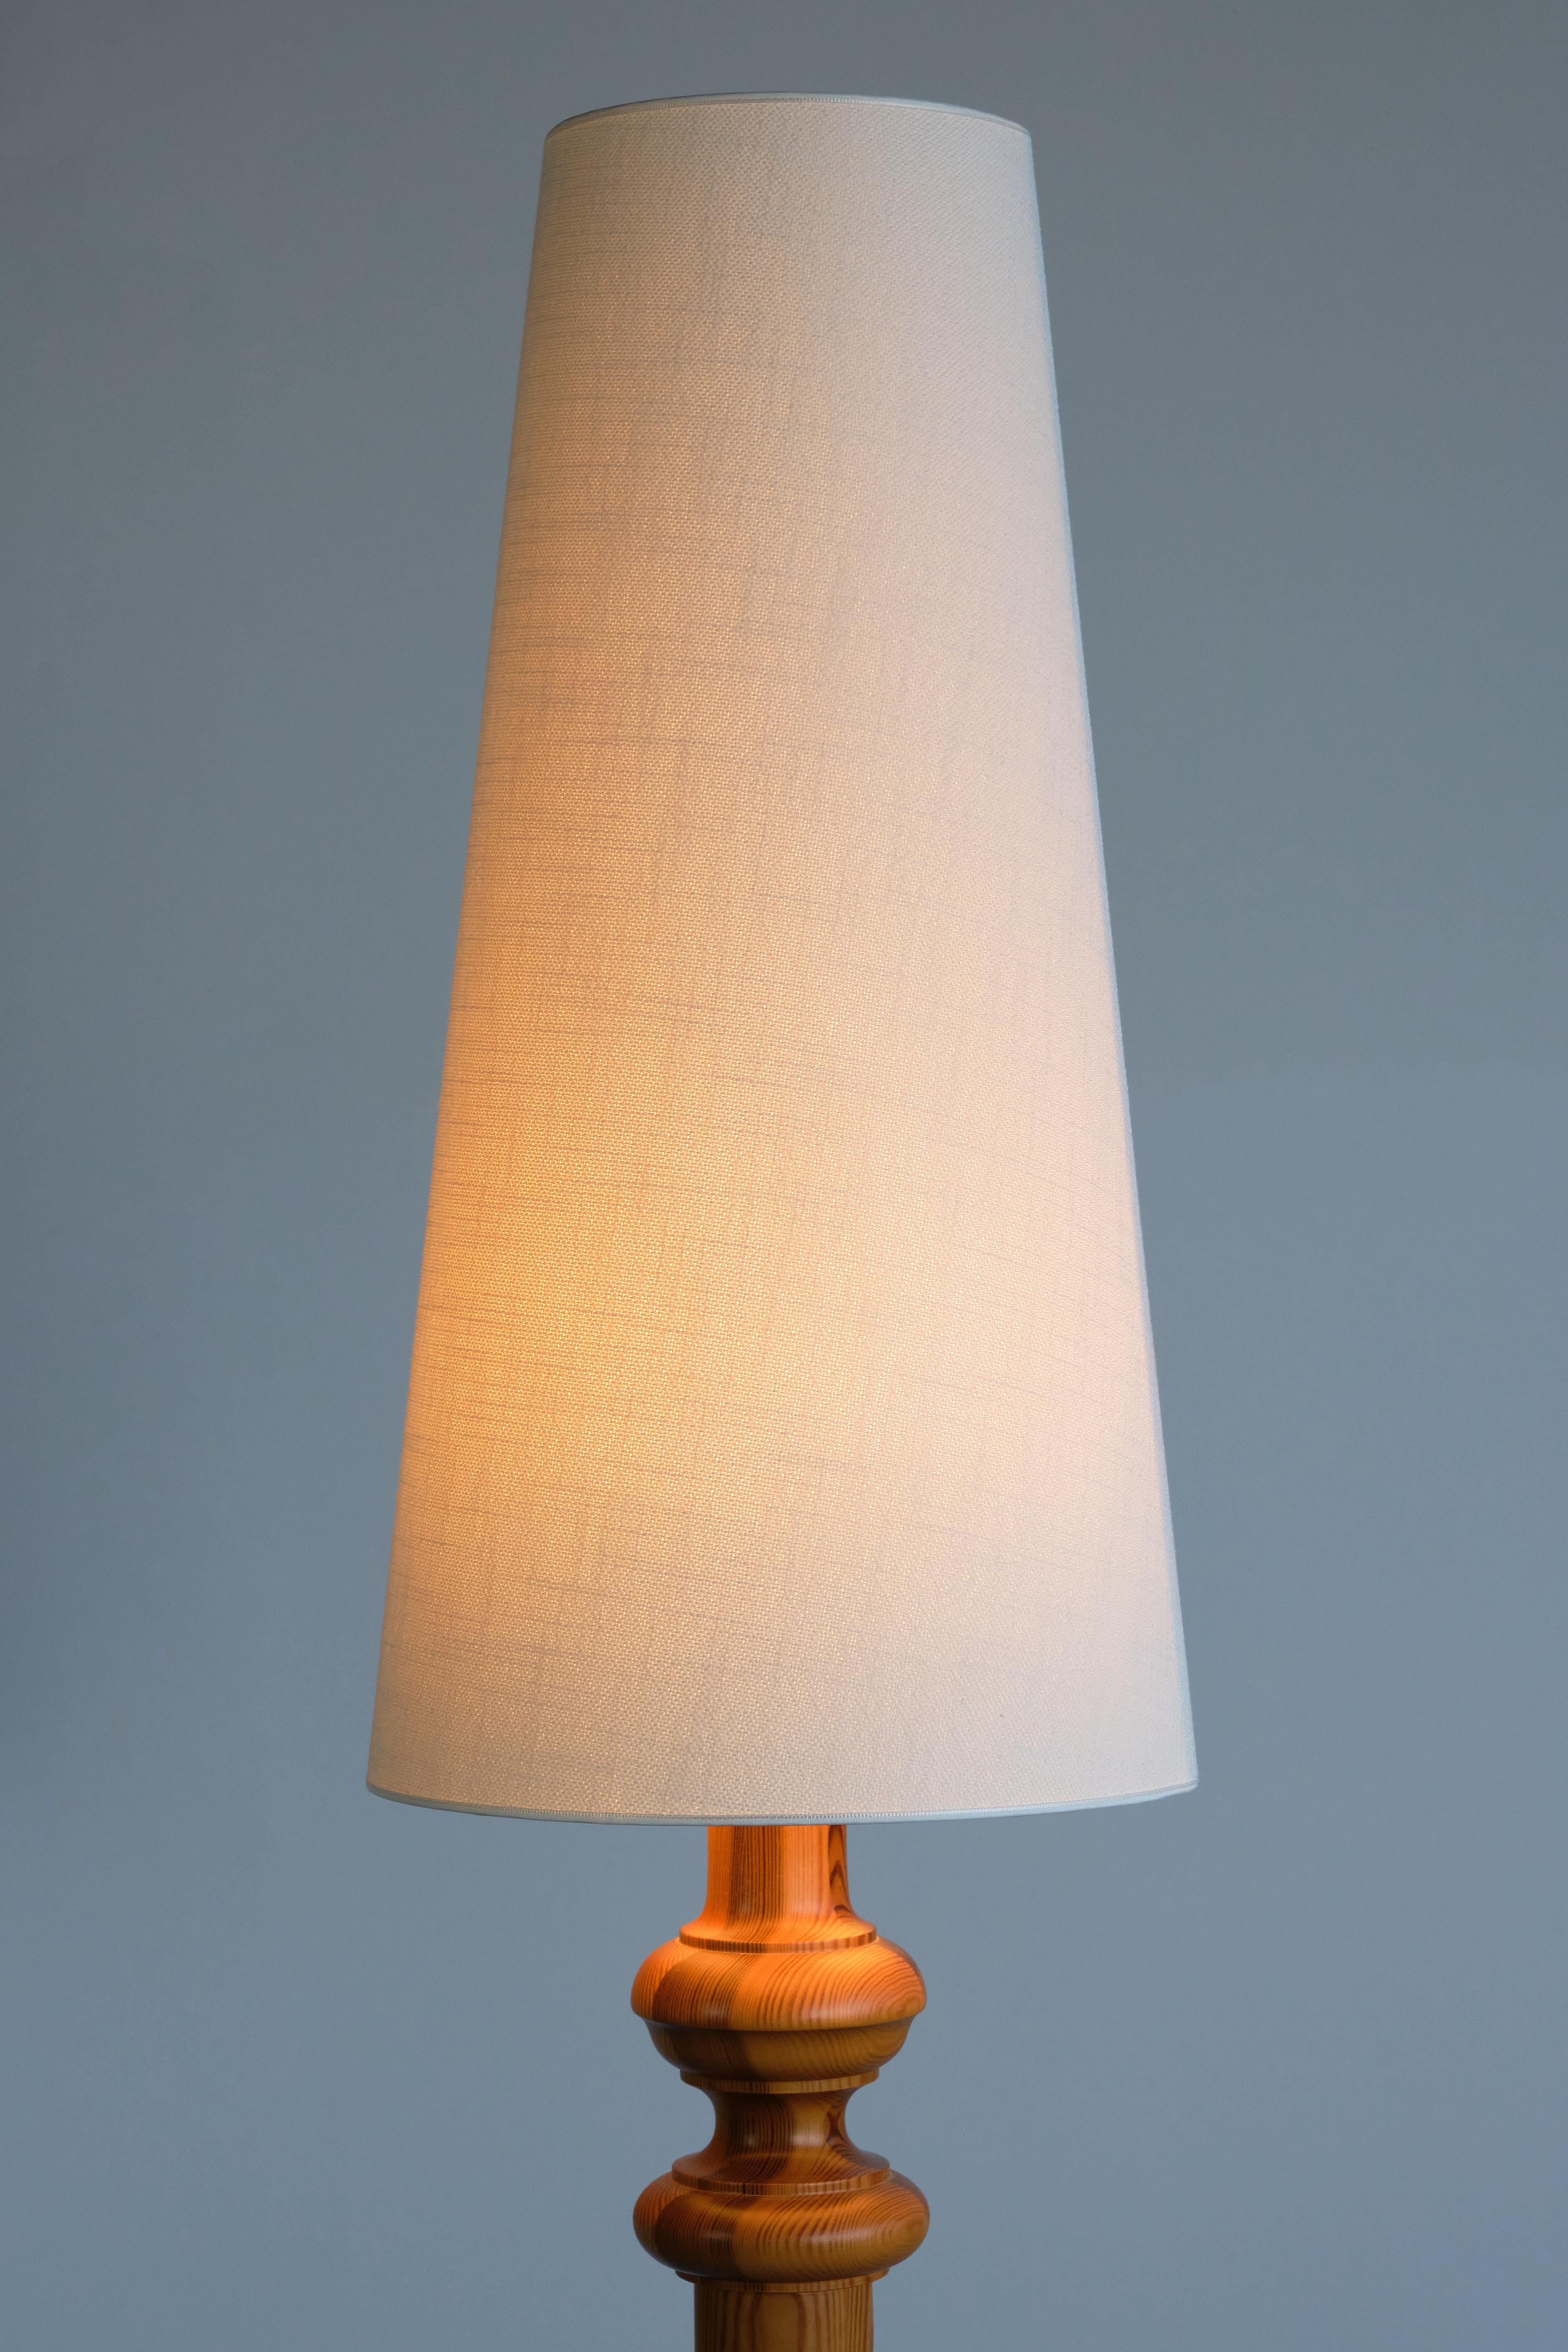 Swedish Nybro Armaturfabric Tall Floor Lamp in Solid Pine Wood, Sweden, 1960s For Sale